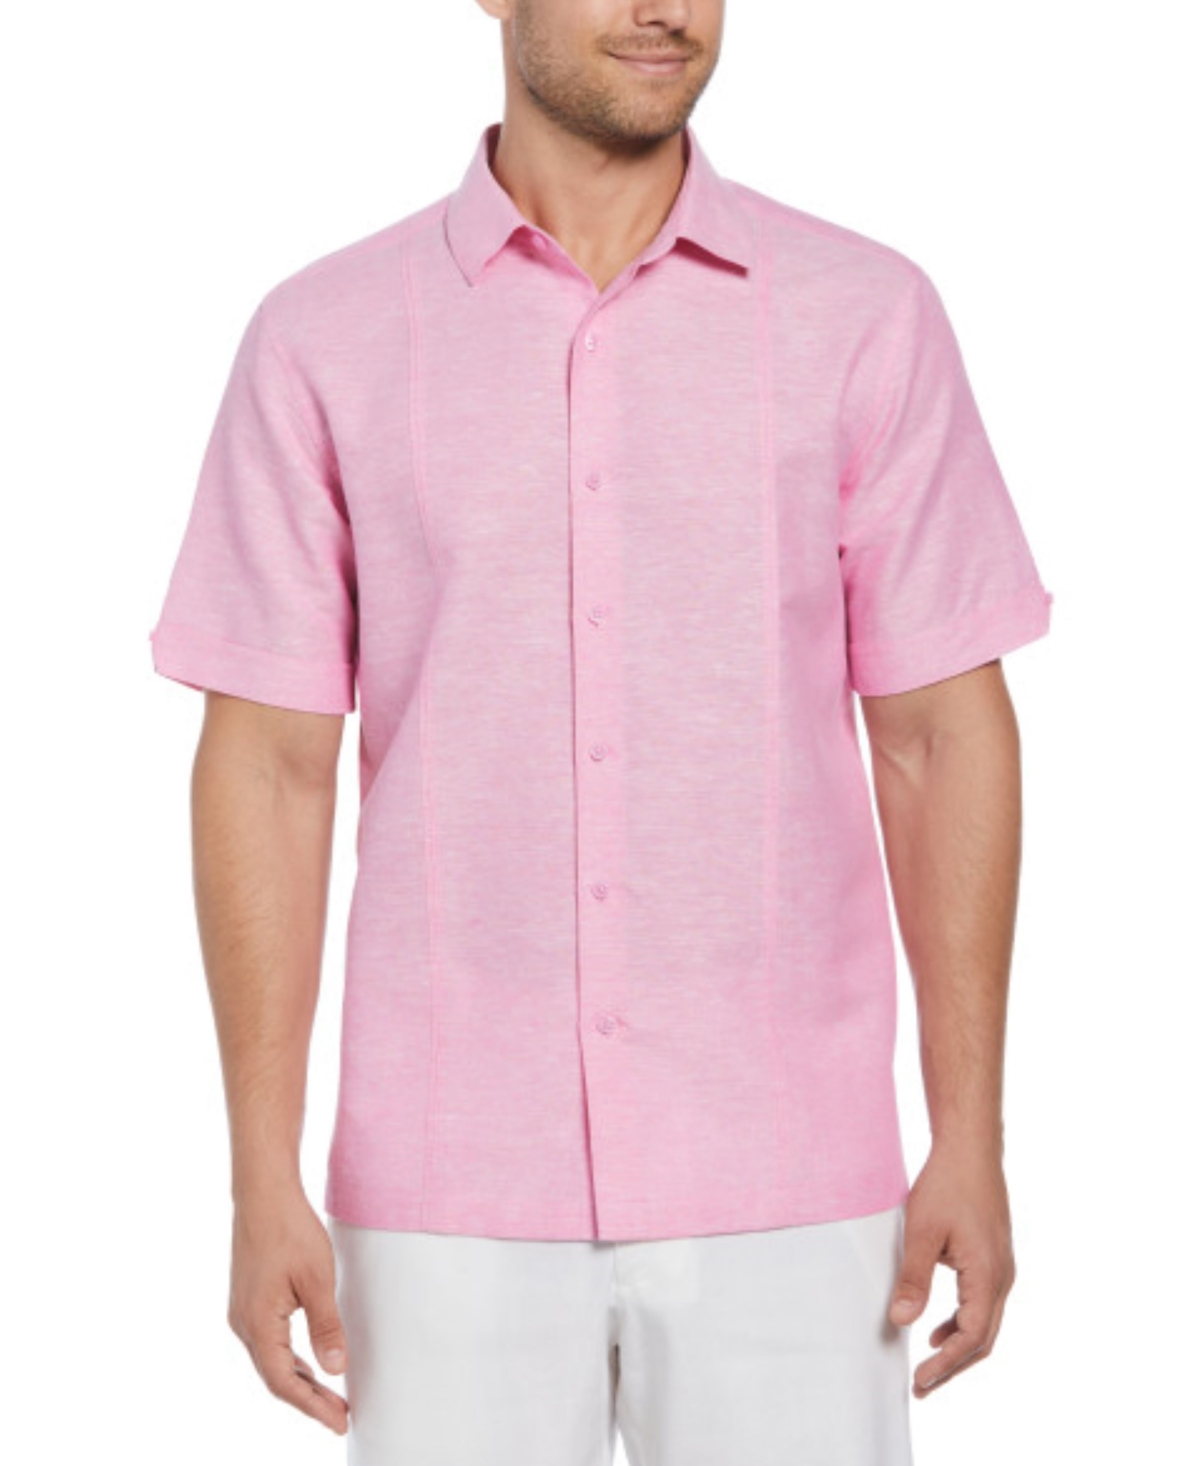 Men's Classic-Fit Linen Blend Short Sleeve Button-Front Shirt - Strawberry